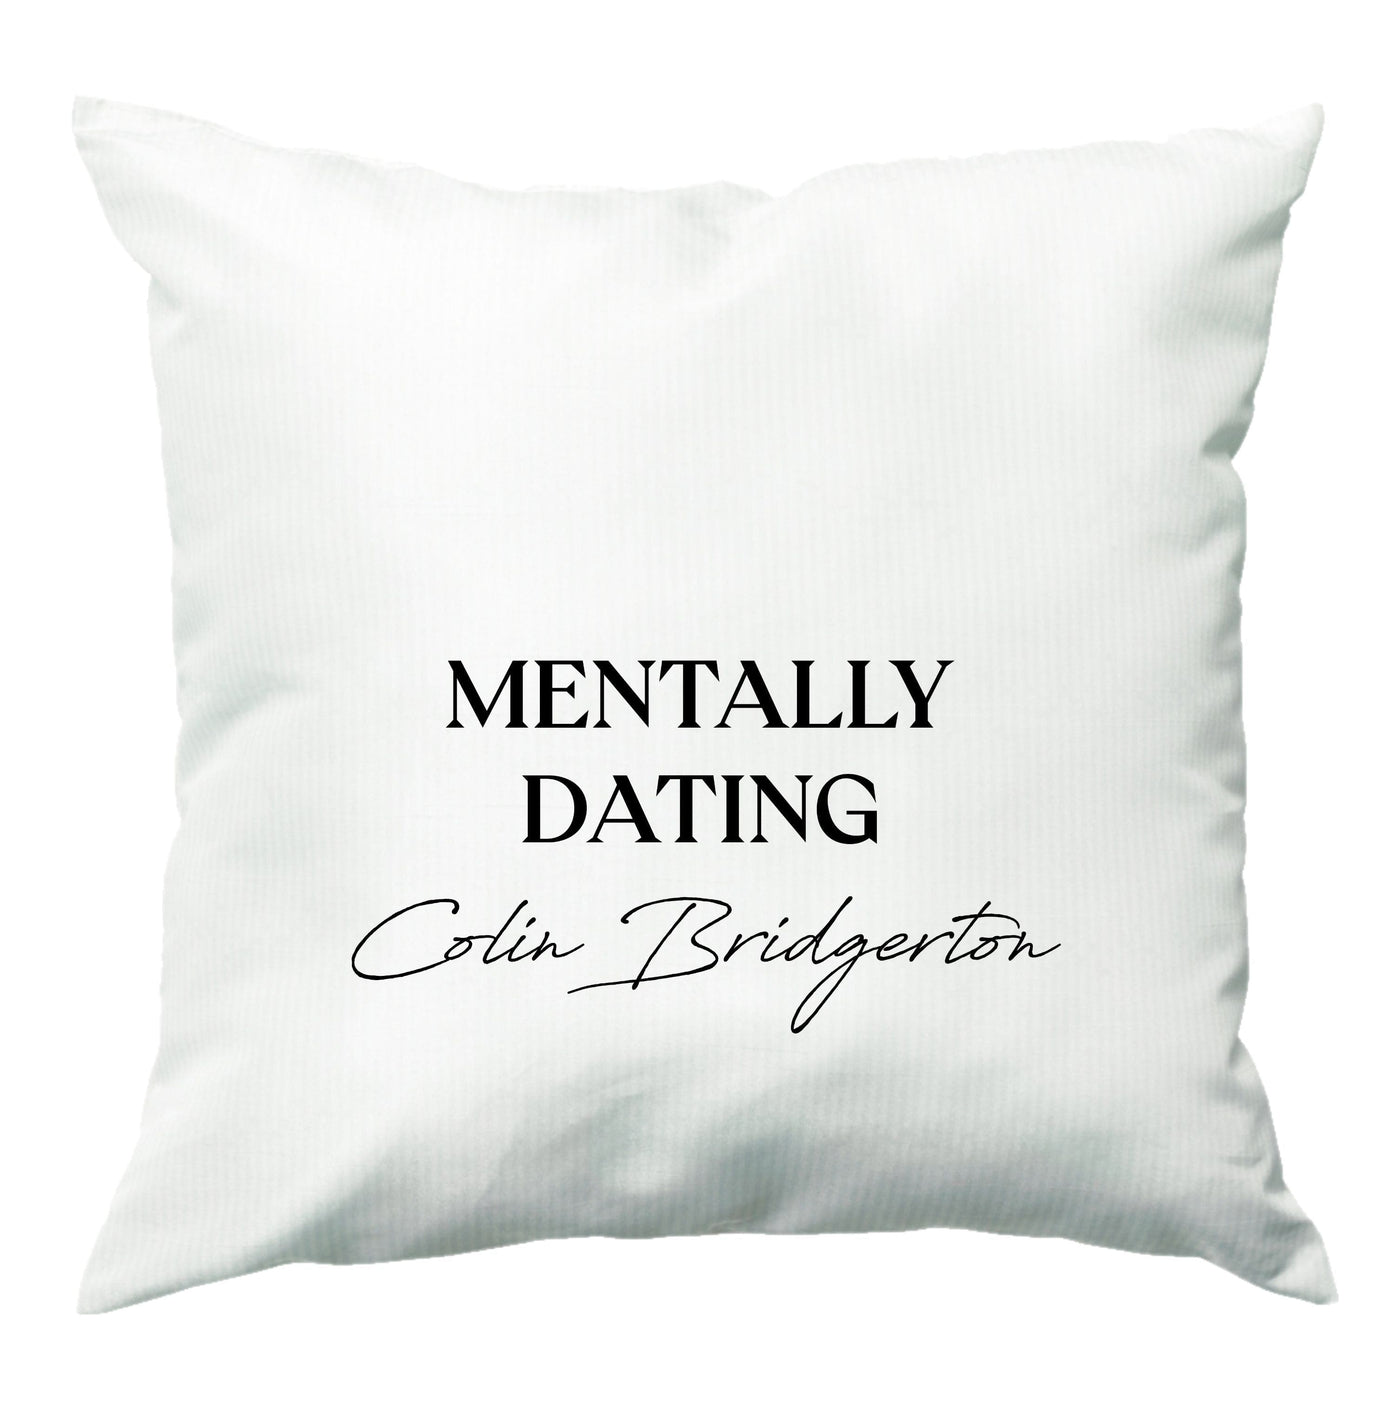 Mentally Dating Colin Bridgerton - Bridgerton Cushion